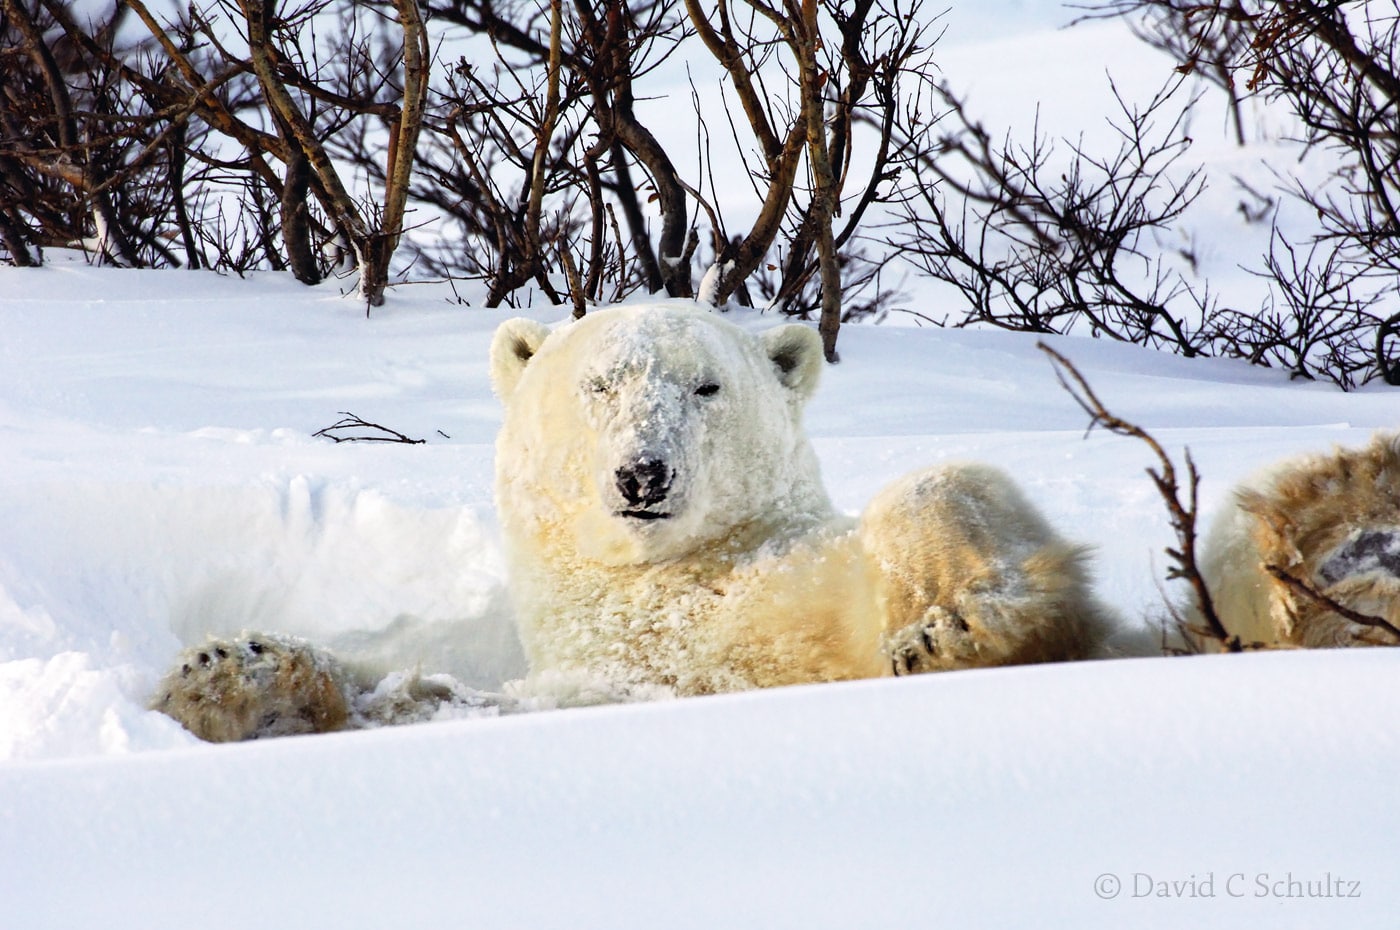 Polar bear, Canada - Image #168-502